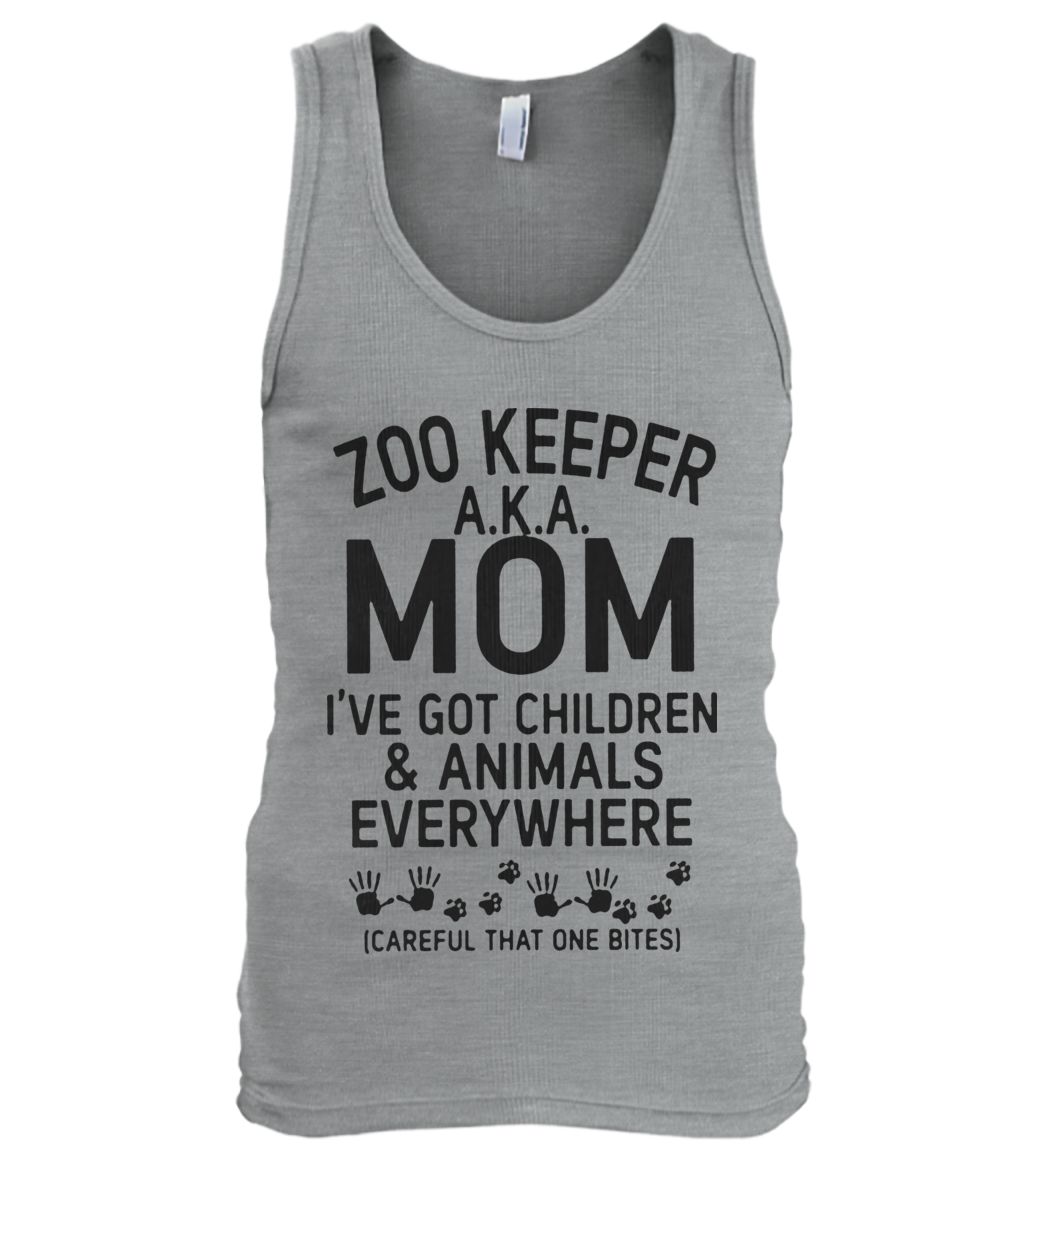 Zoo keeper aka mom I've got children and animals everywhere men's tank top